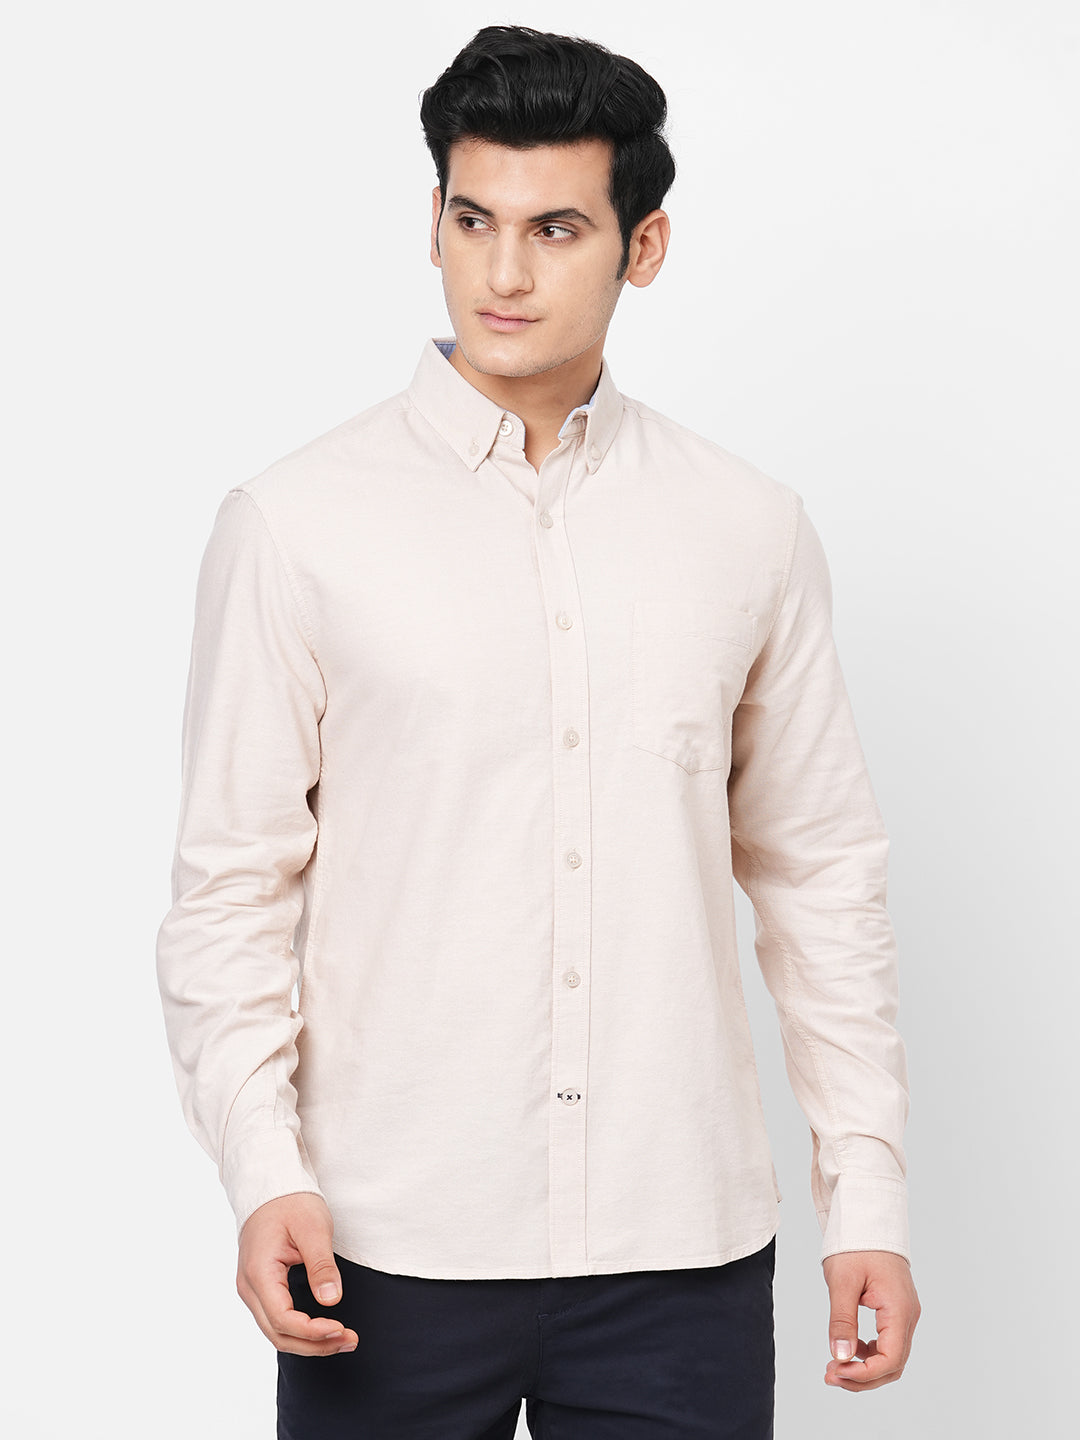 Men's Khaki Oxford Cotton Button down Collar Long Sleeved Shirt